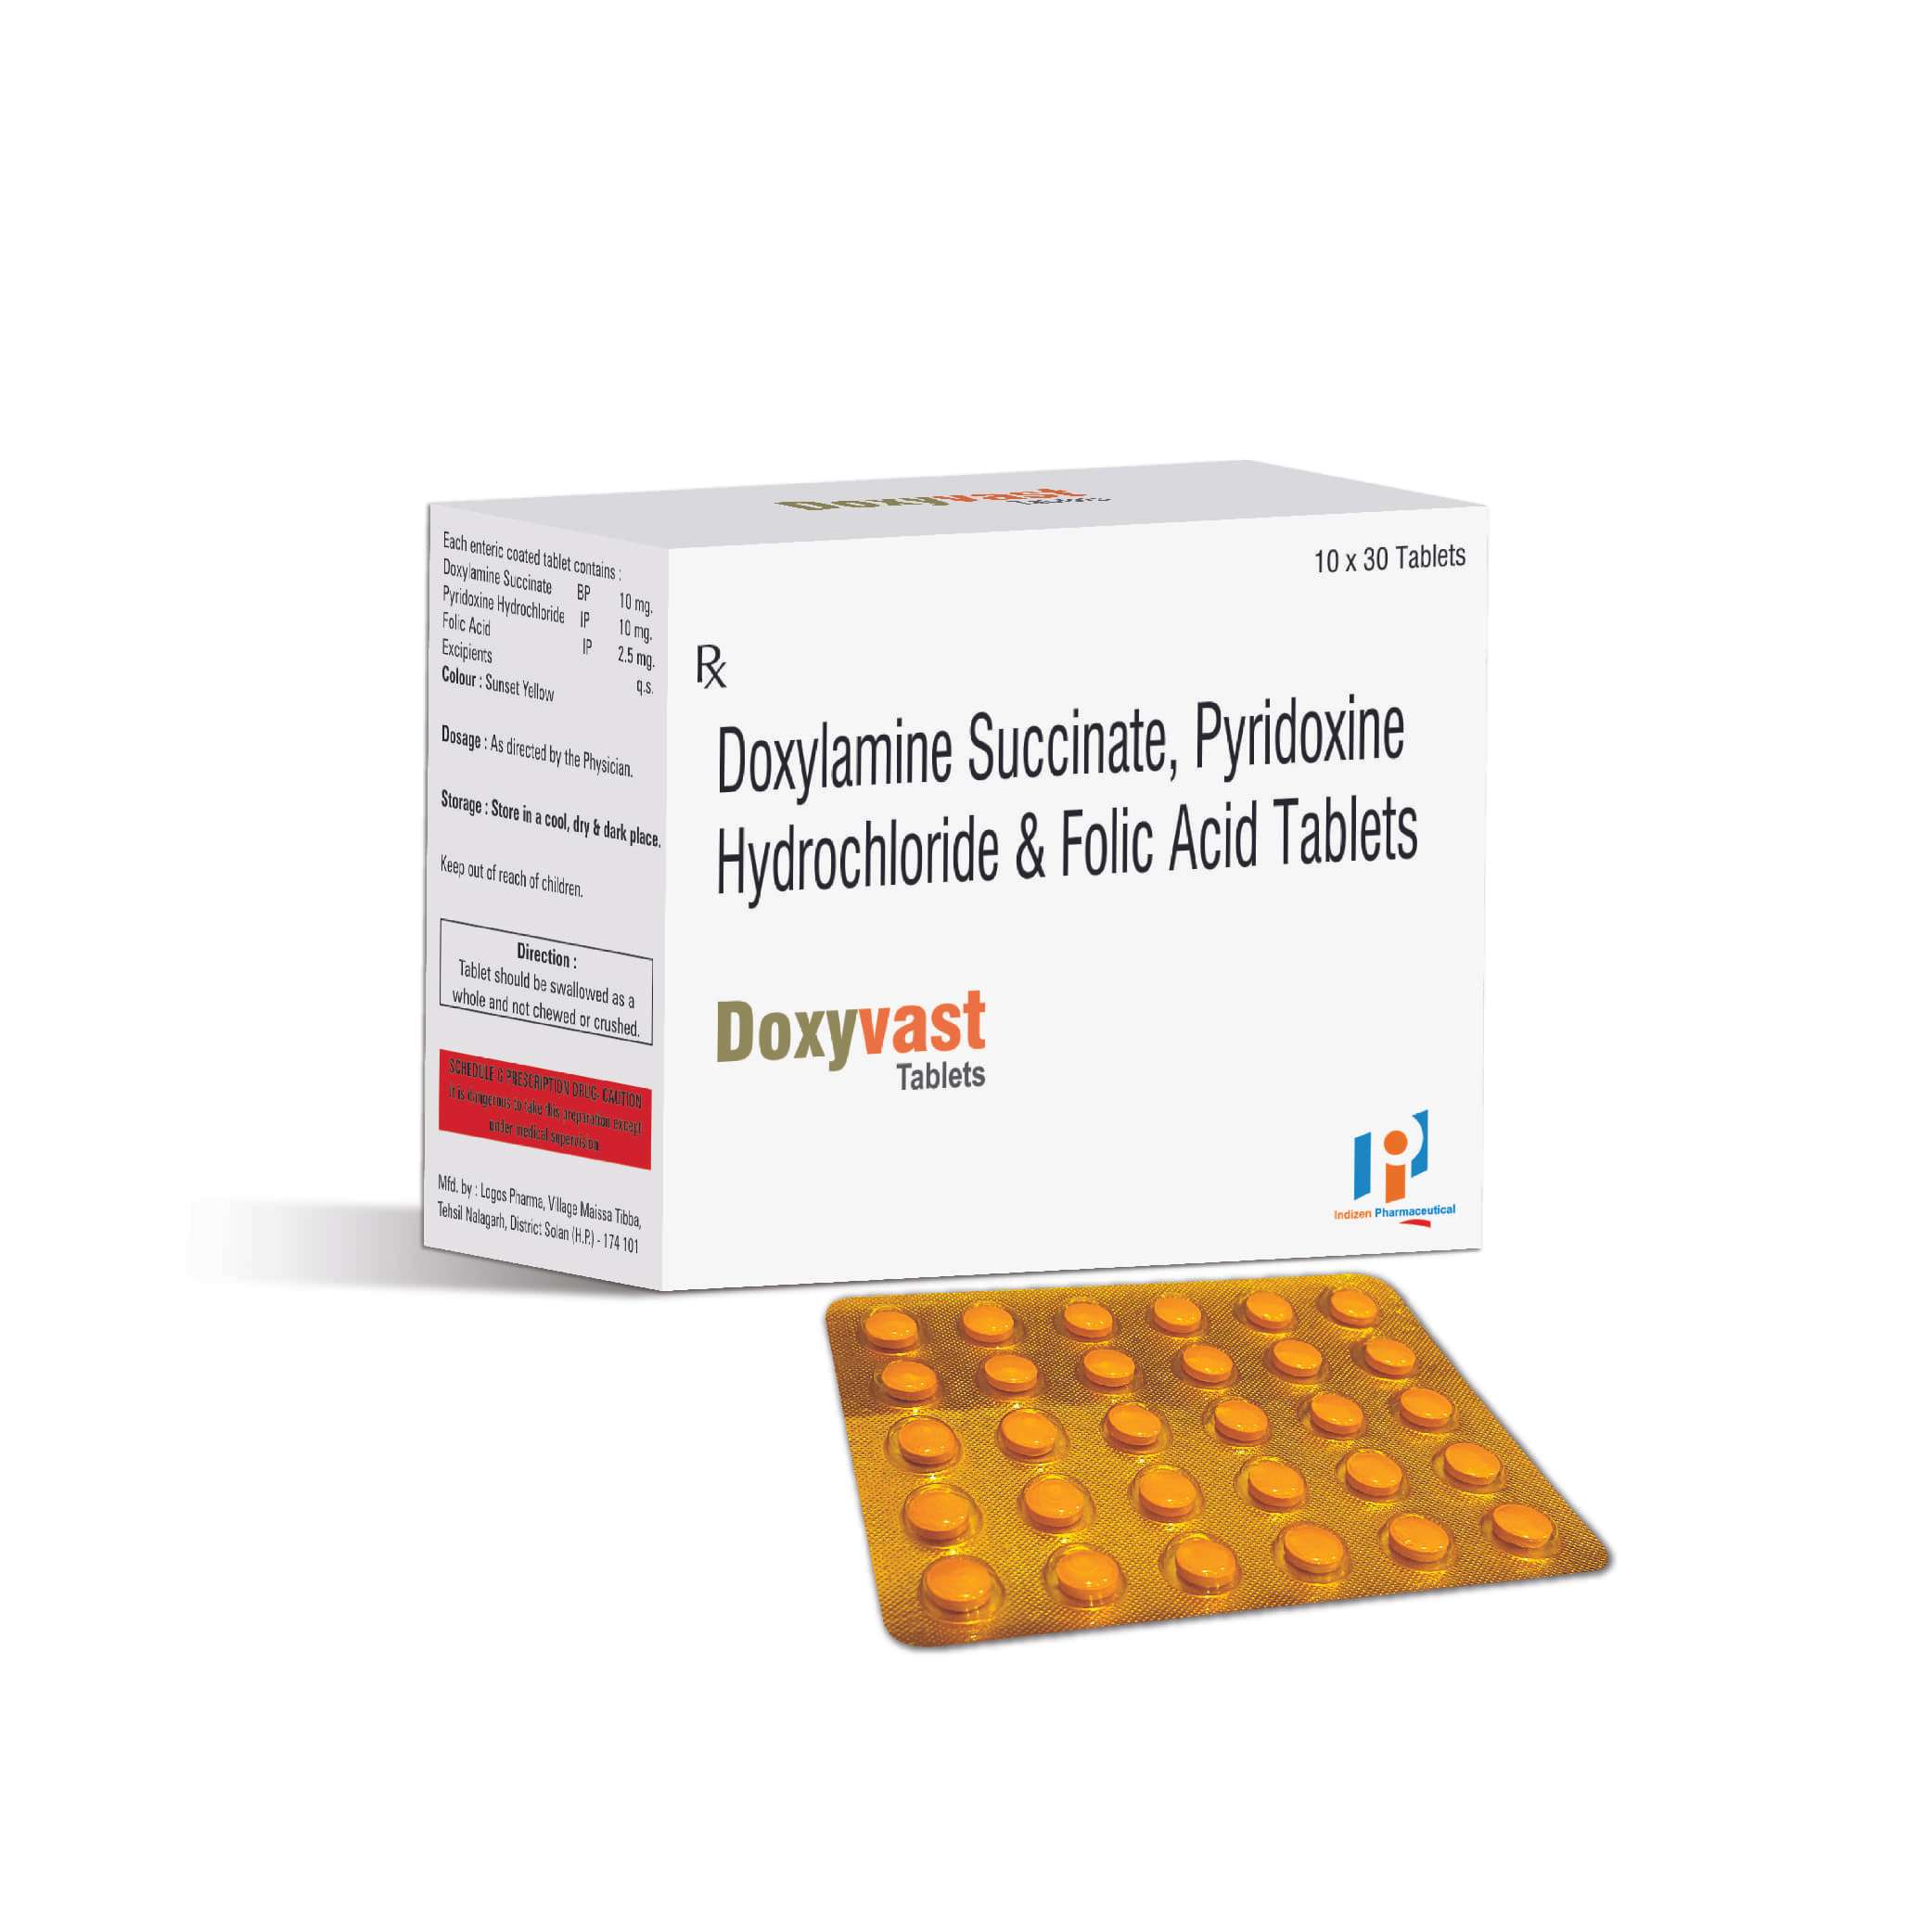 doxylamine succinate 10 mg + pyridoxine 10 mg + folic acid 2.5 mg